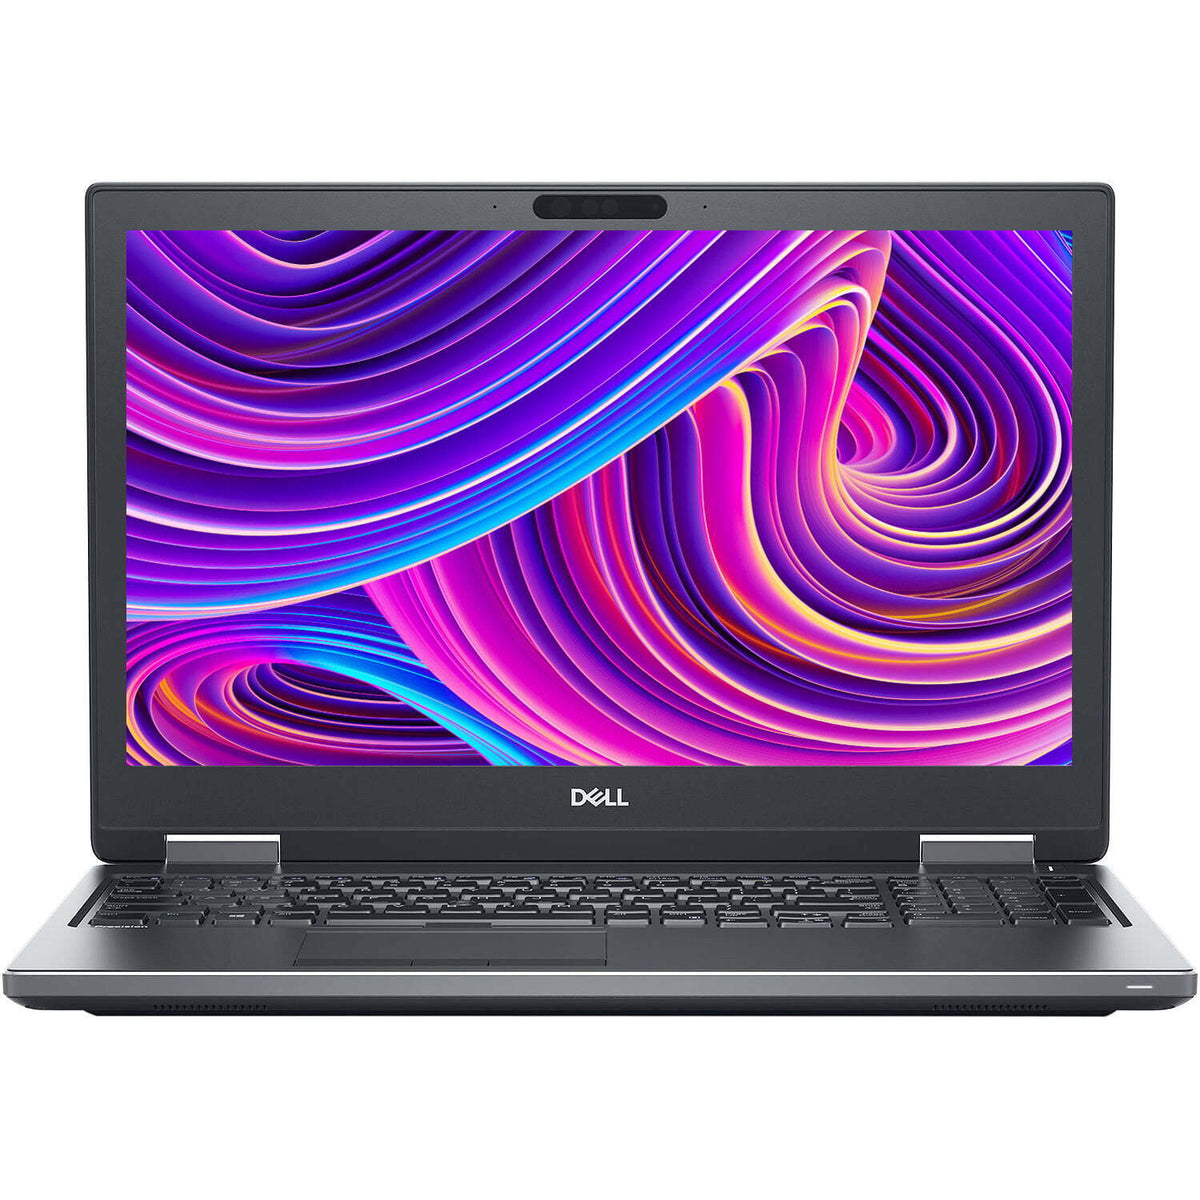 Dell Precision 7520 15.6" Laptop i7-7920HQ 480GB 32GB RAM - Very Good Condition